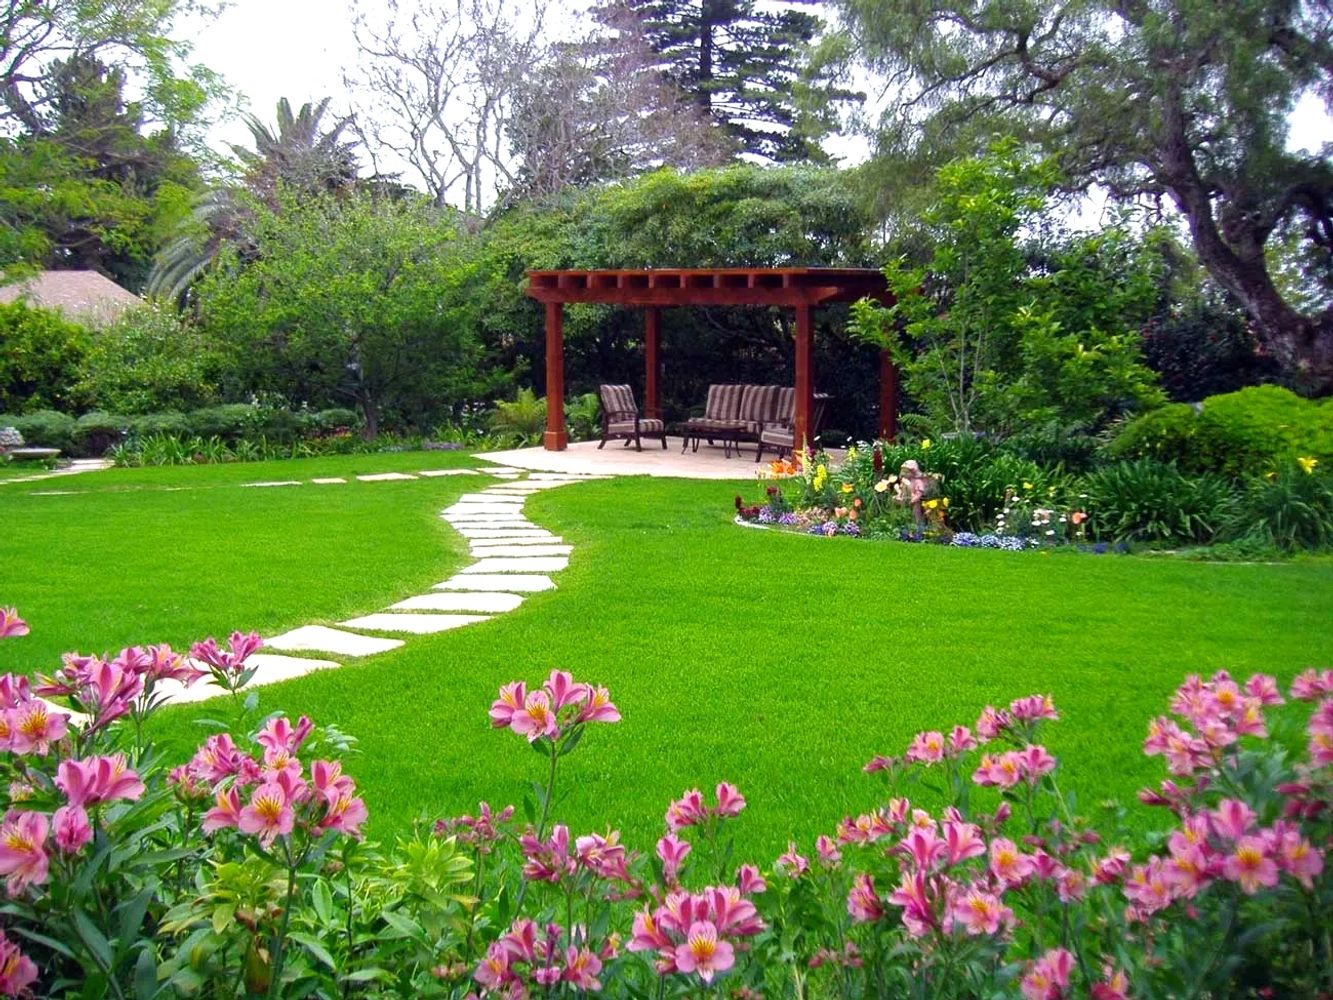 Landscape Designer San Diego. Pergola, patio, grassy area, flowerbeds.